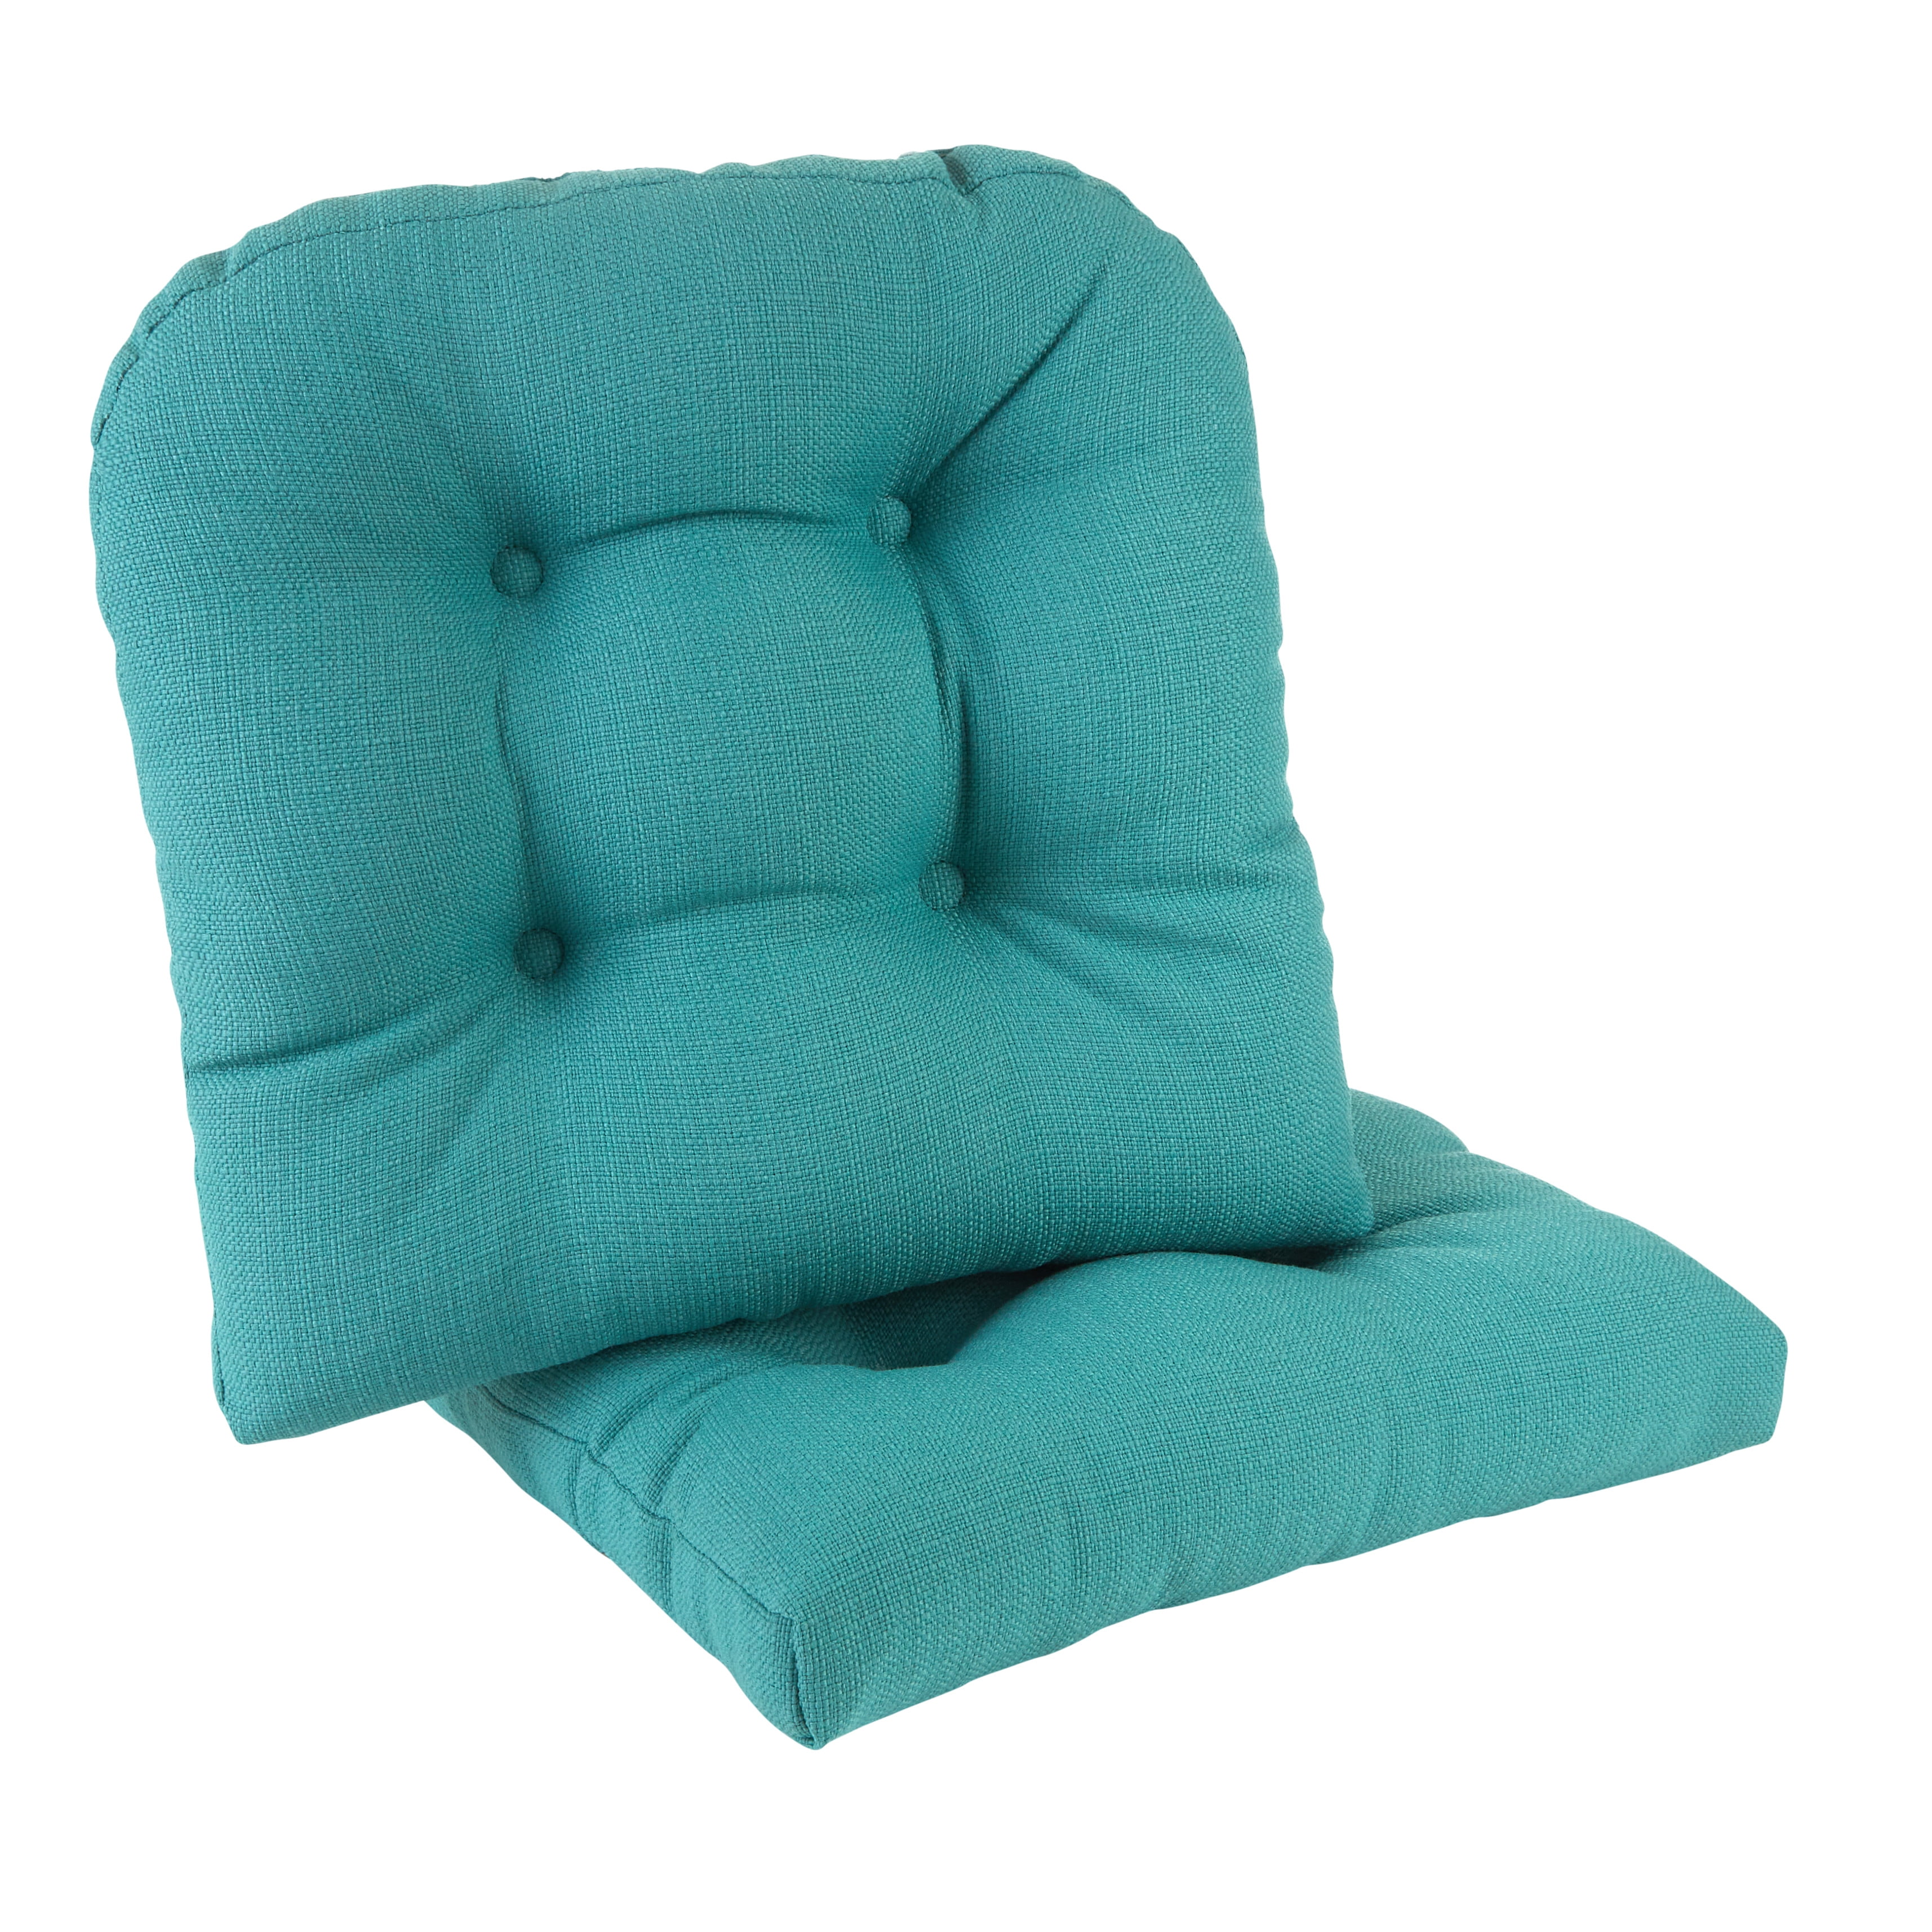 Gripper 15 x 15 Non-Slip Chance Tufted Memory Foam Chair Cushions Set of  4 - Brown